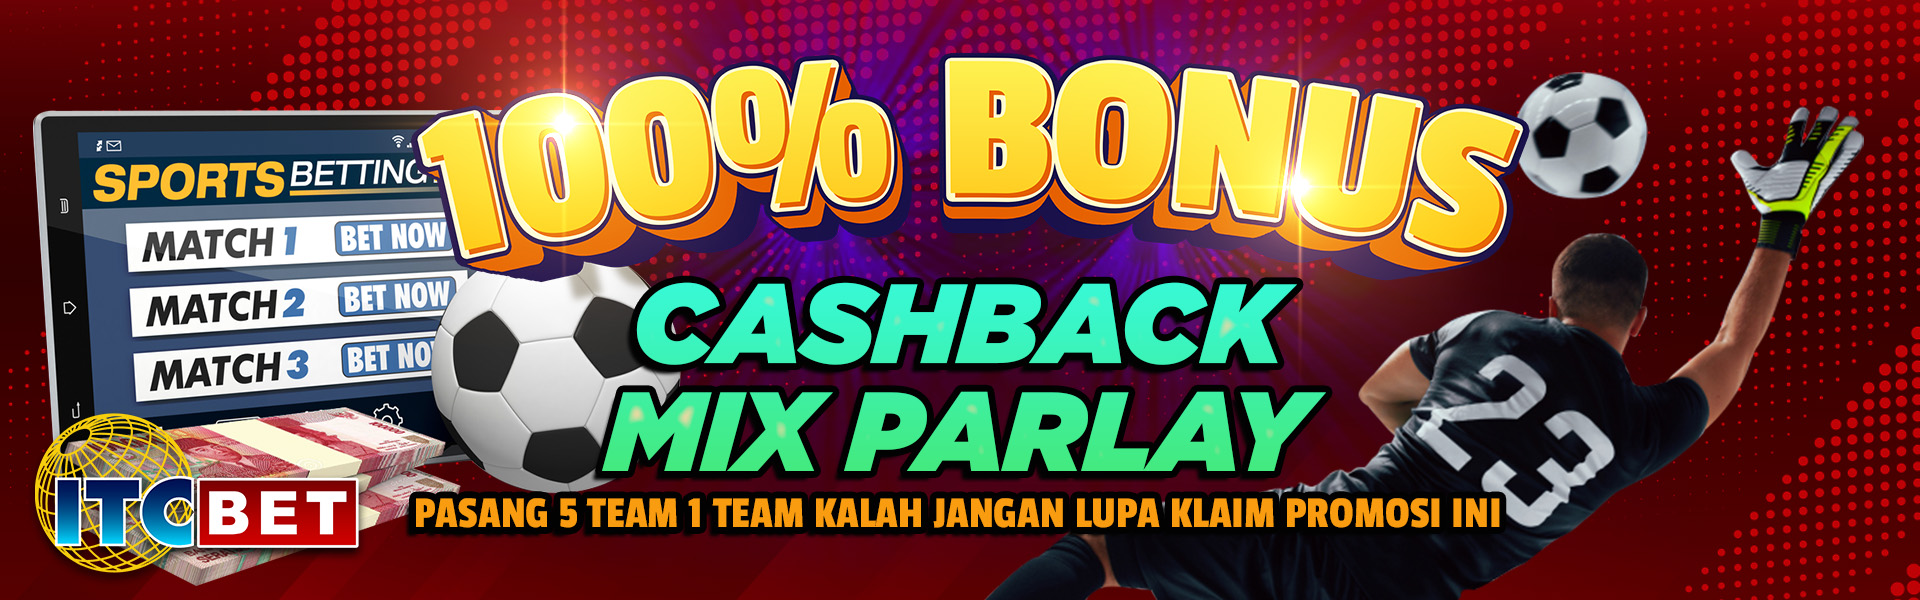 Cashback Mix Parlay 100%